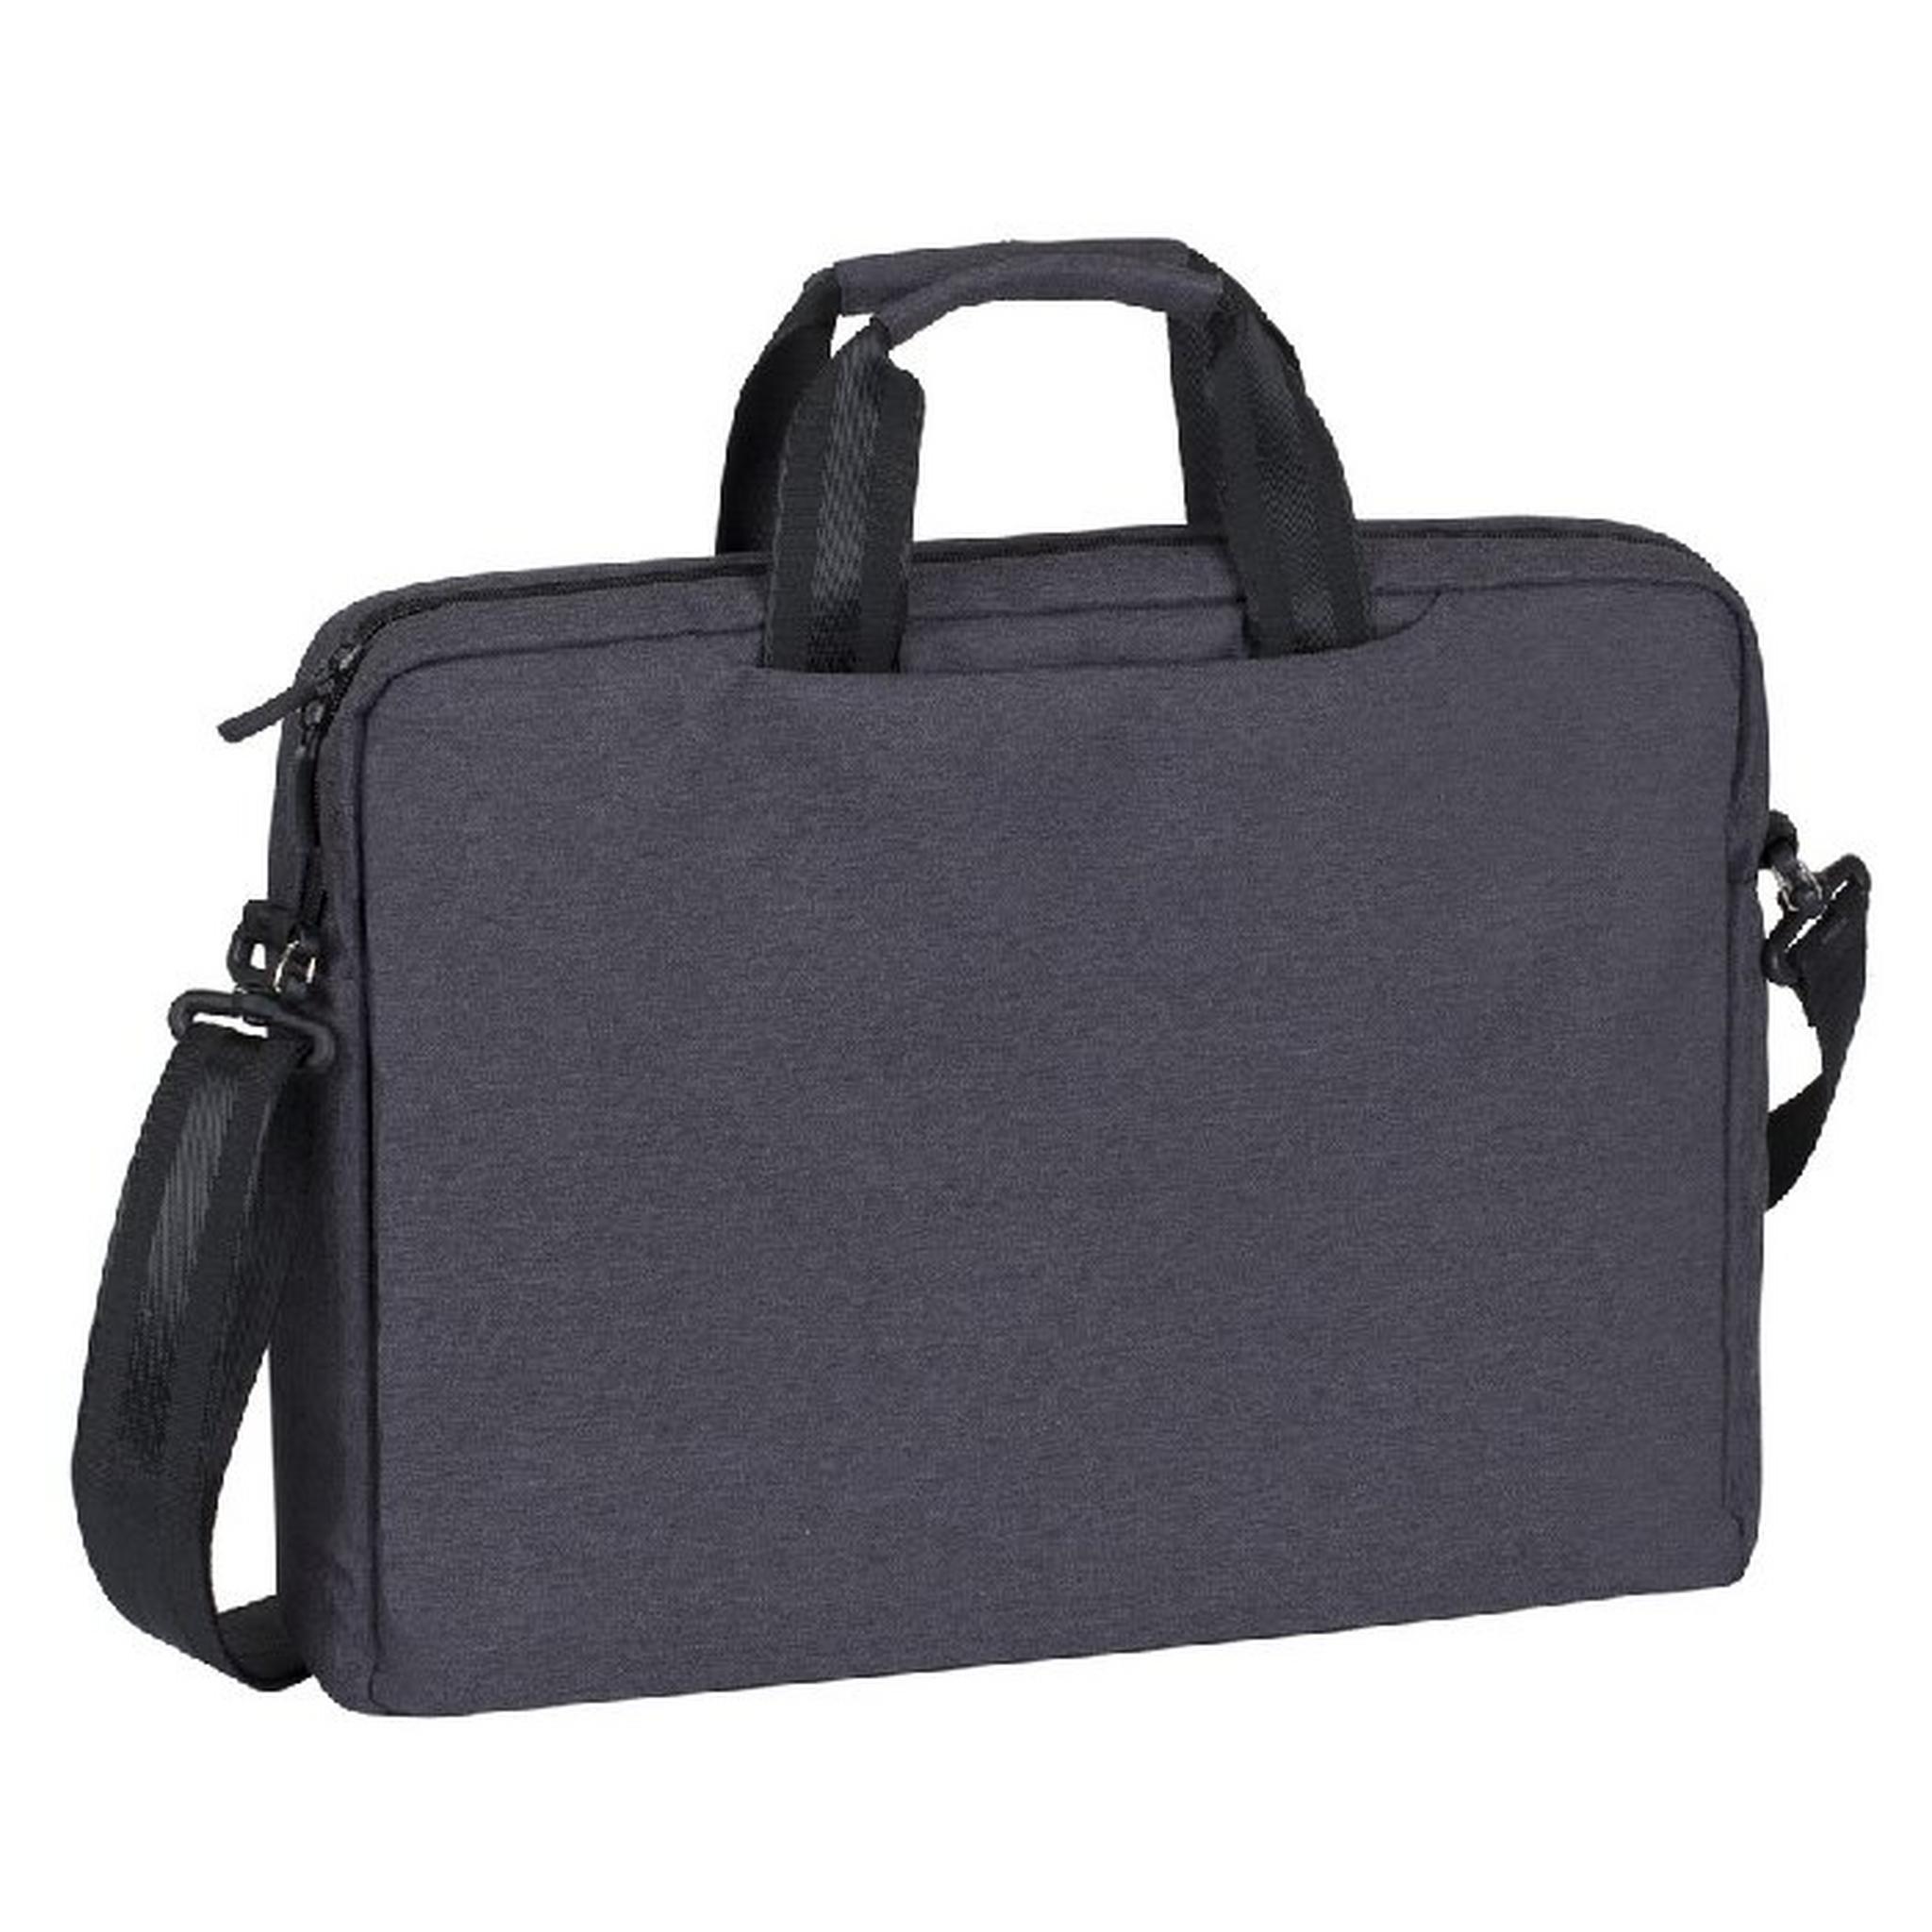 RIVA Eco Laptop Shoulder Bag, 15.6-inch, SUZUKA-ECO-7730 – Black